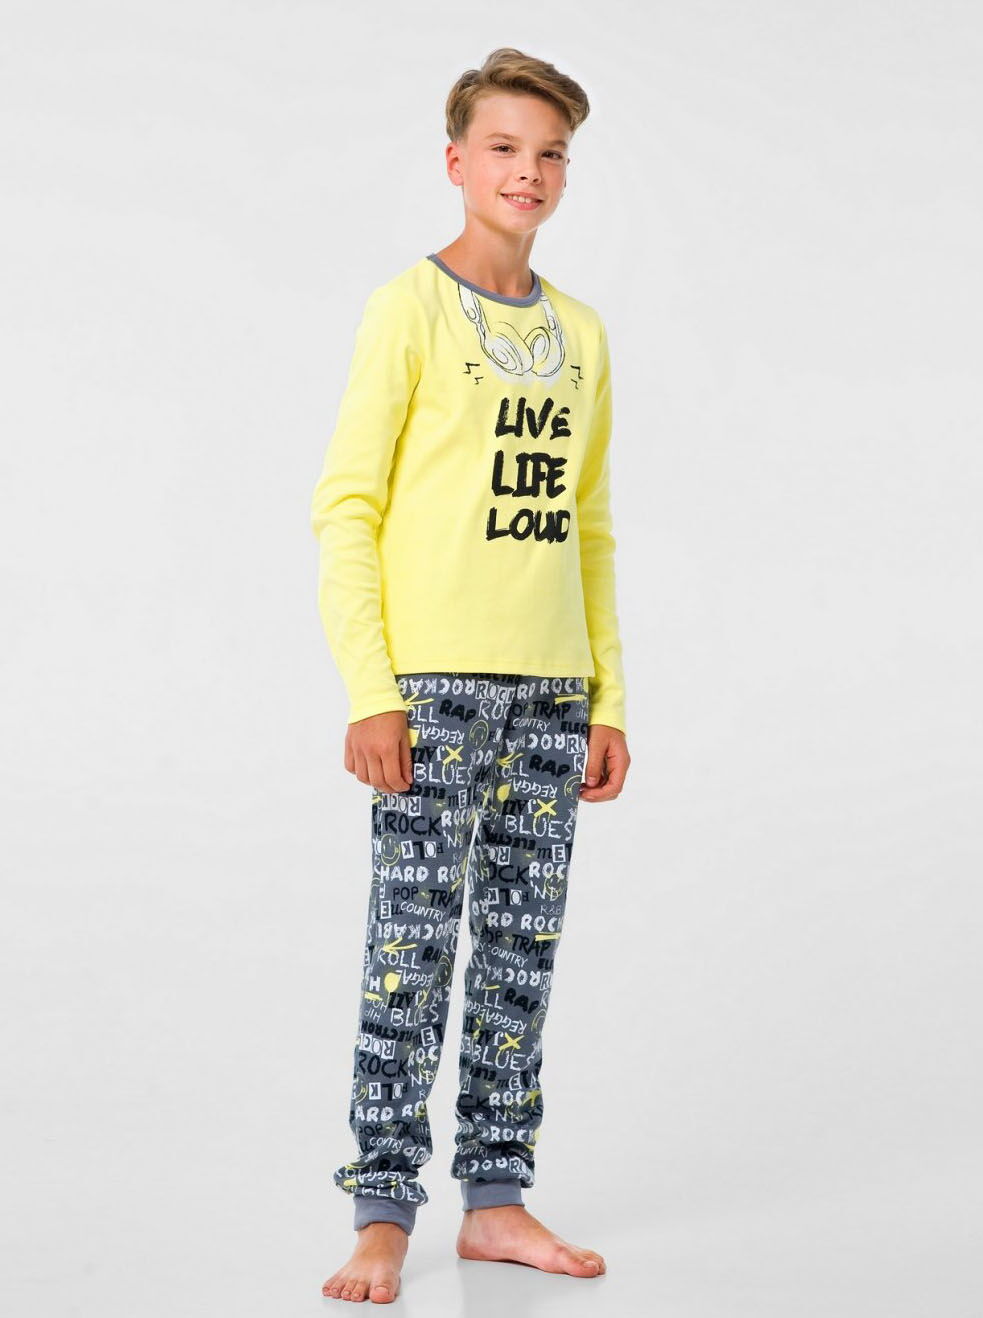 Пижама для мальчика Smil Rock желтая 104801 - фото